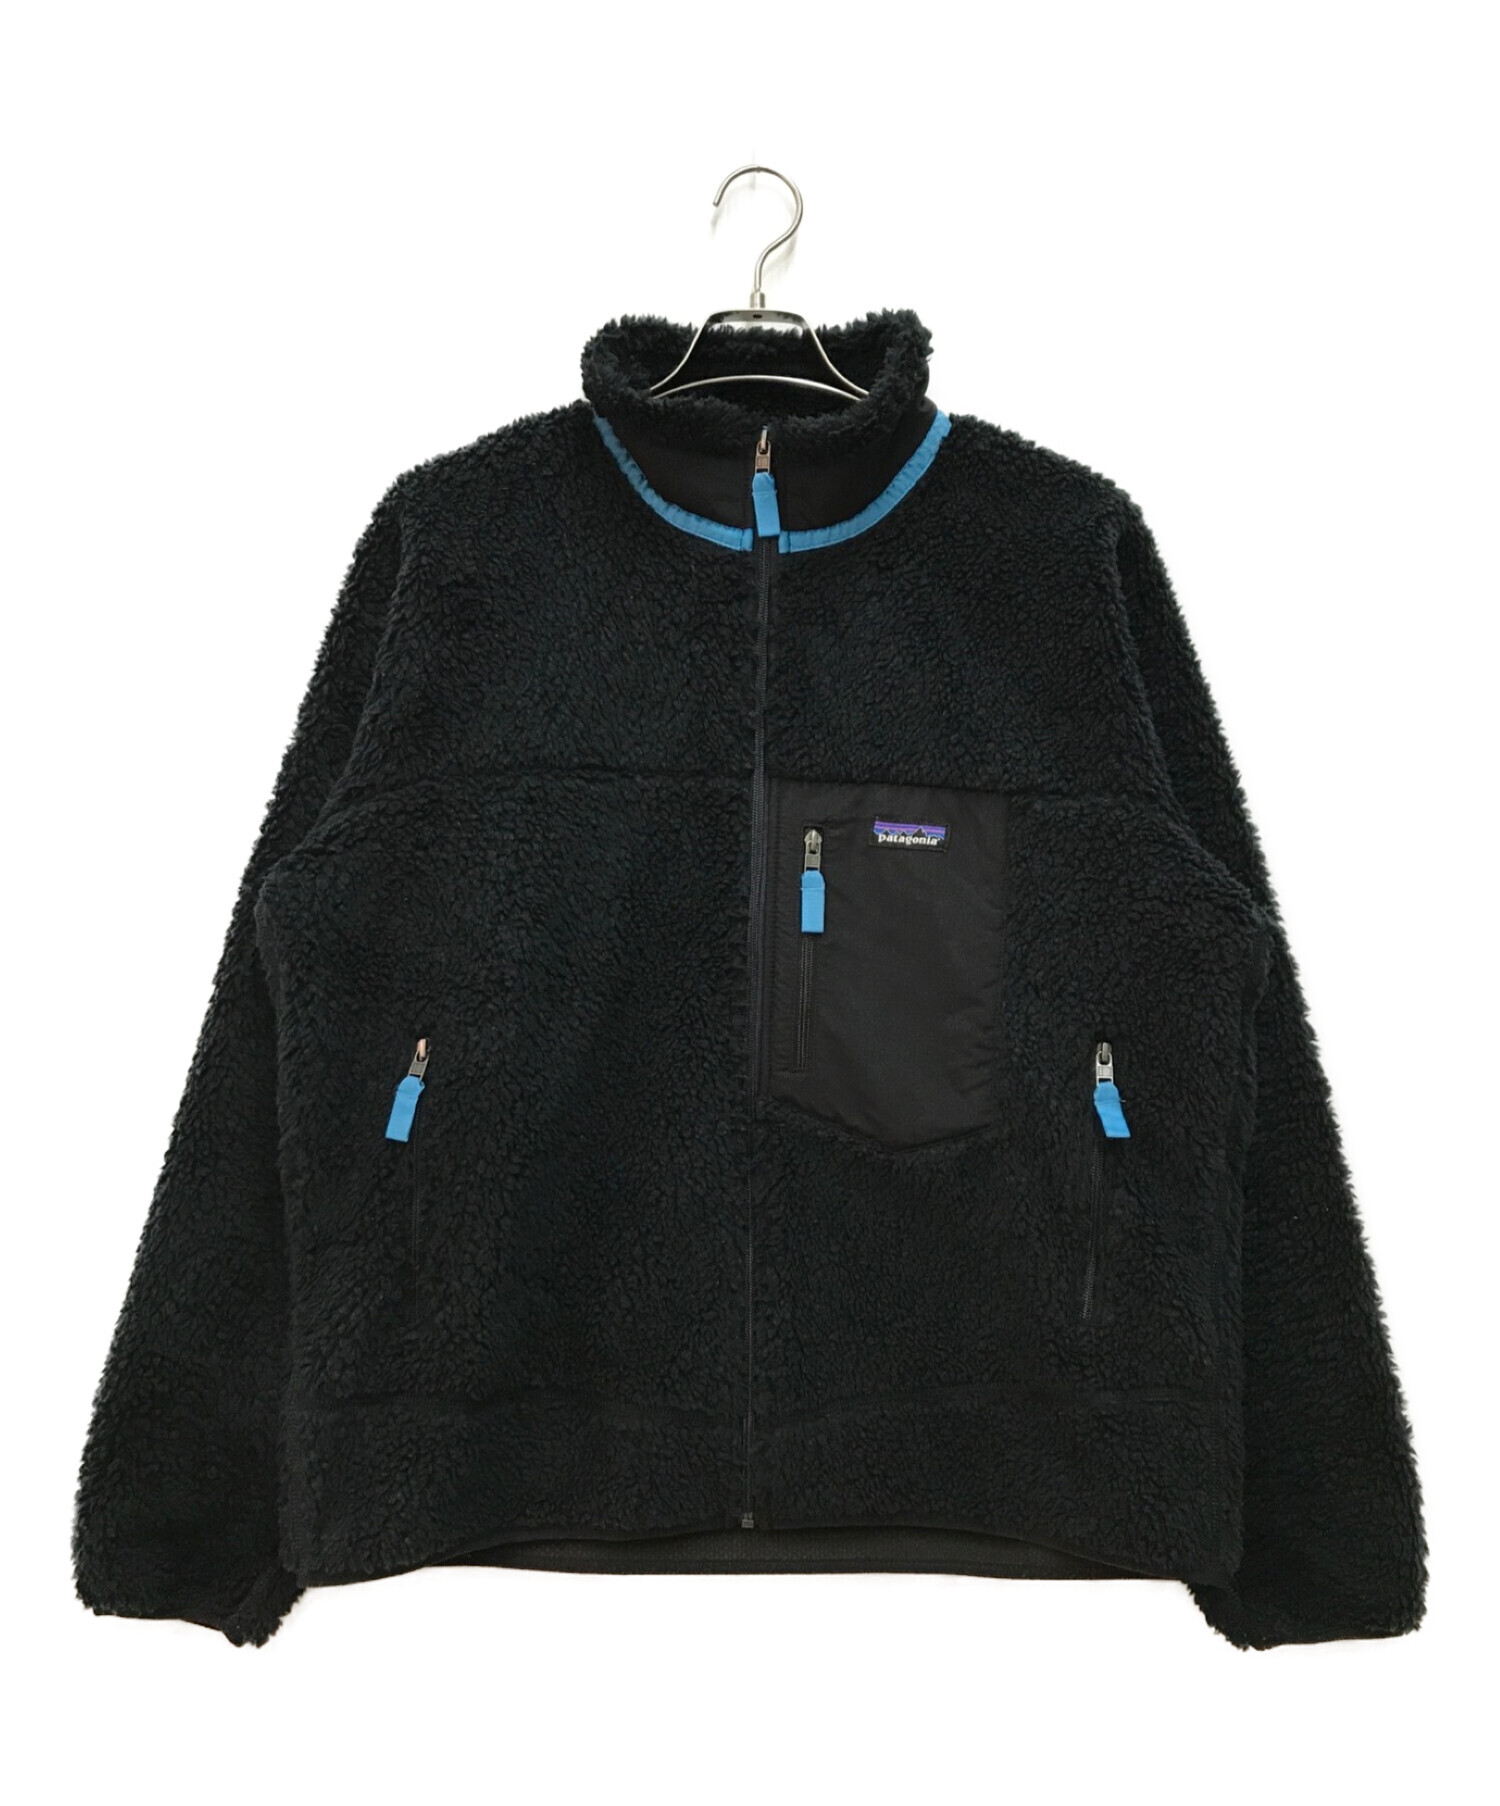 Patagonia (パタゴニア) レトロXフリースジャケット ブラック サイズ:L